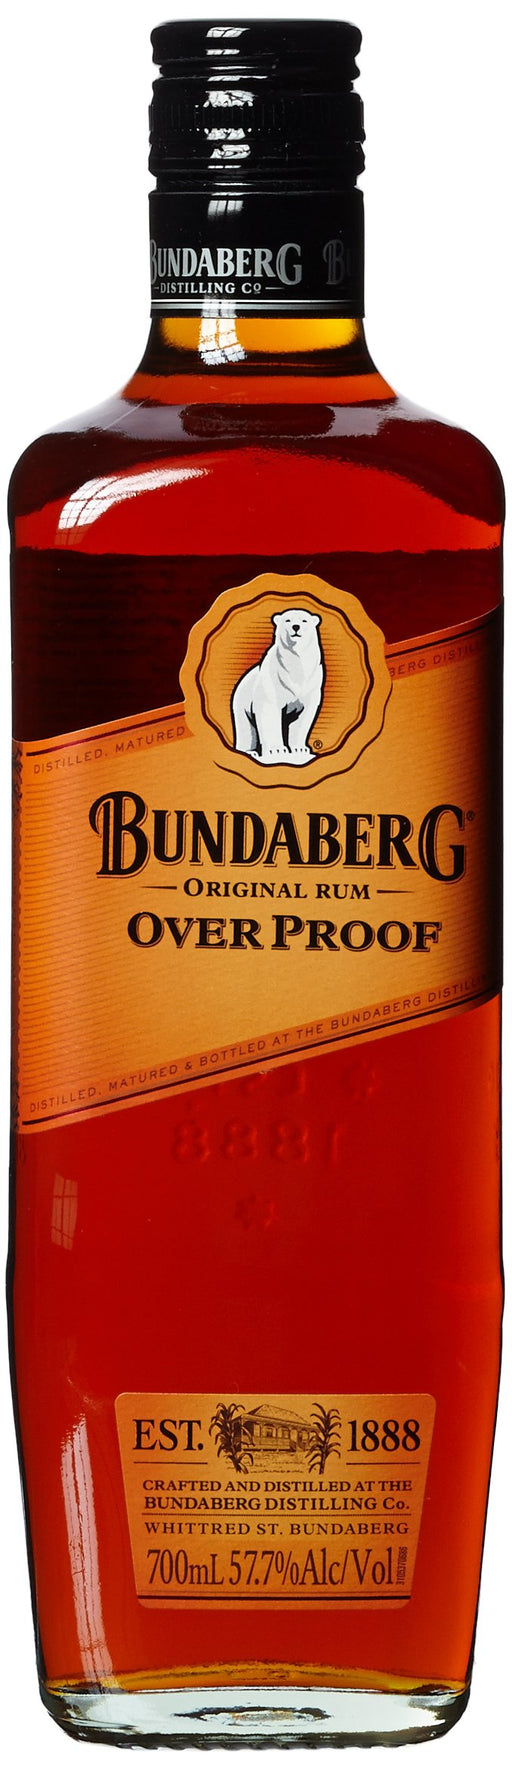 Bundaberg Overproof Rum 700 ml  Visit the Bundaberg Store